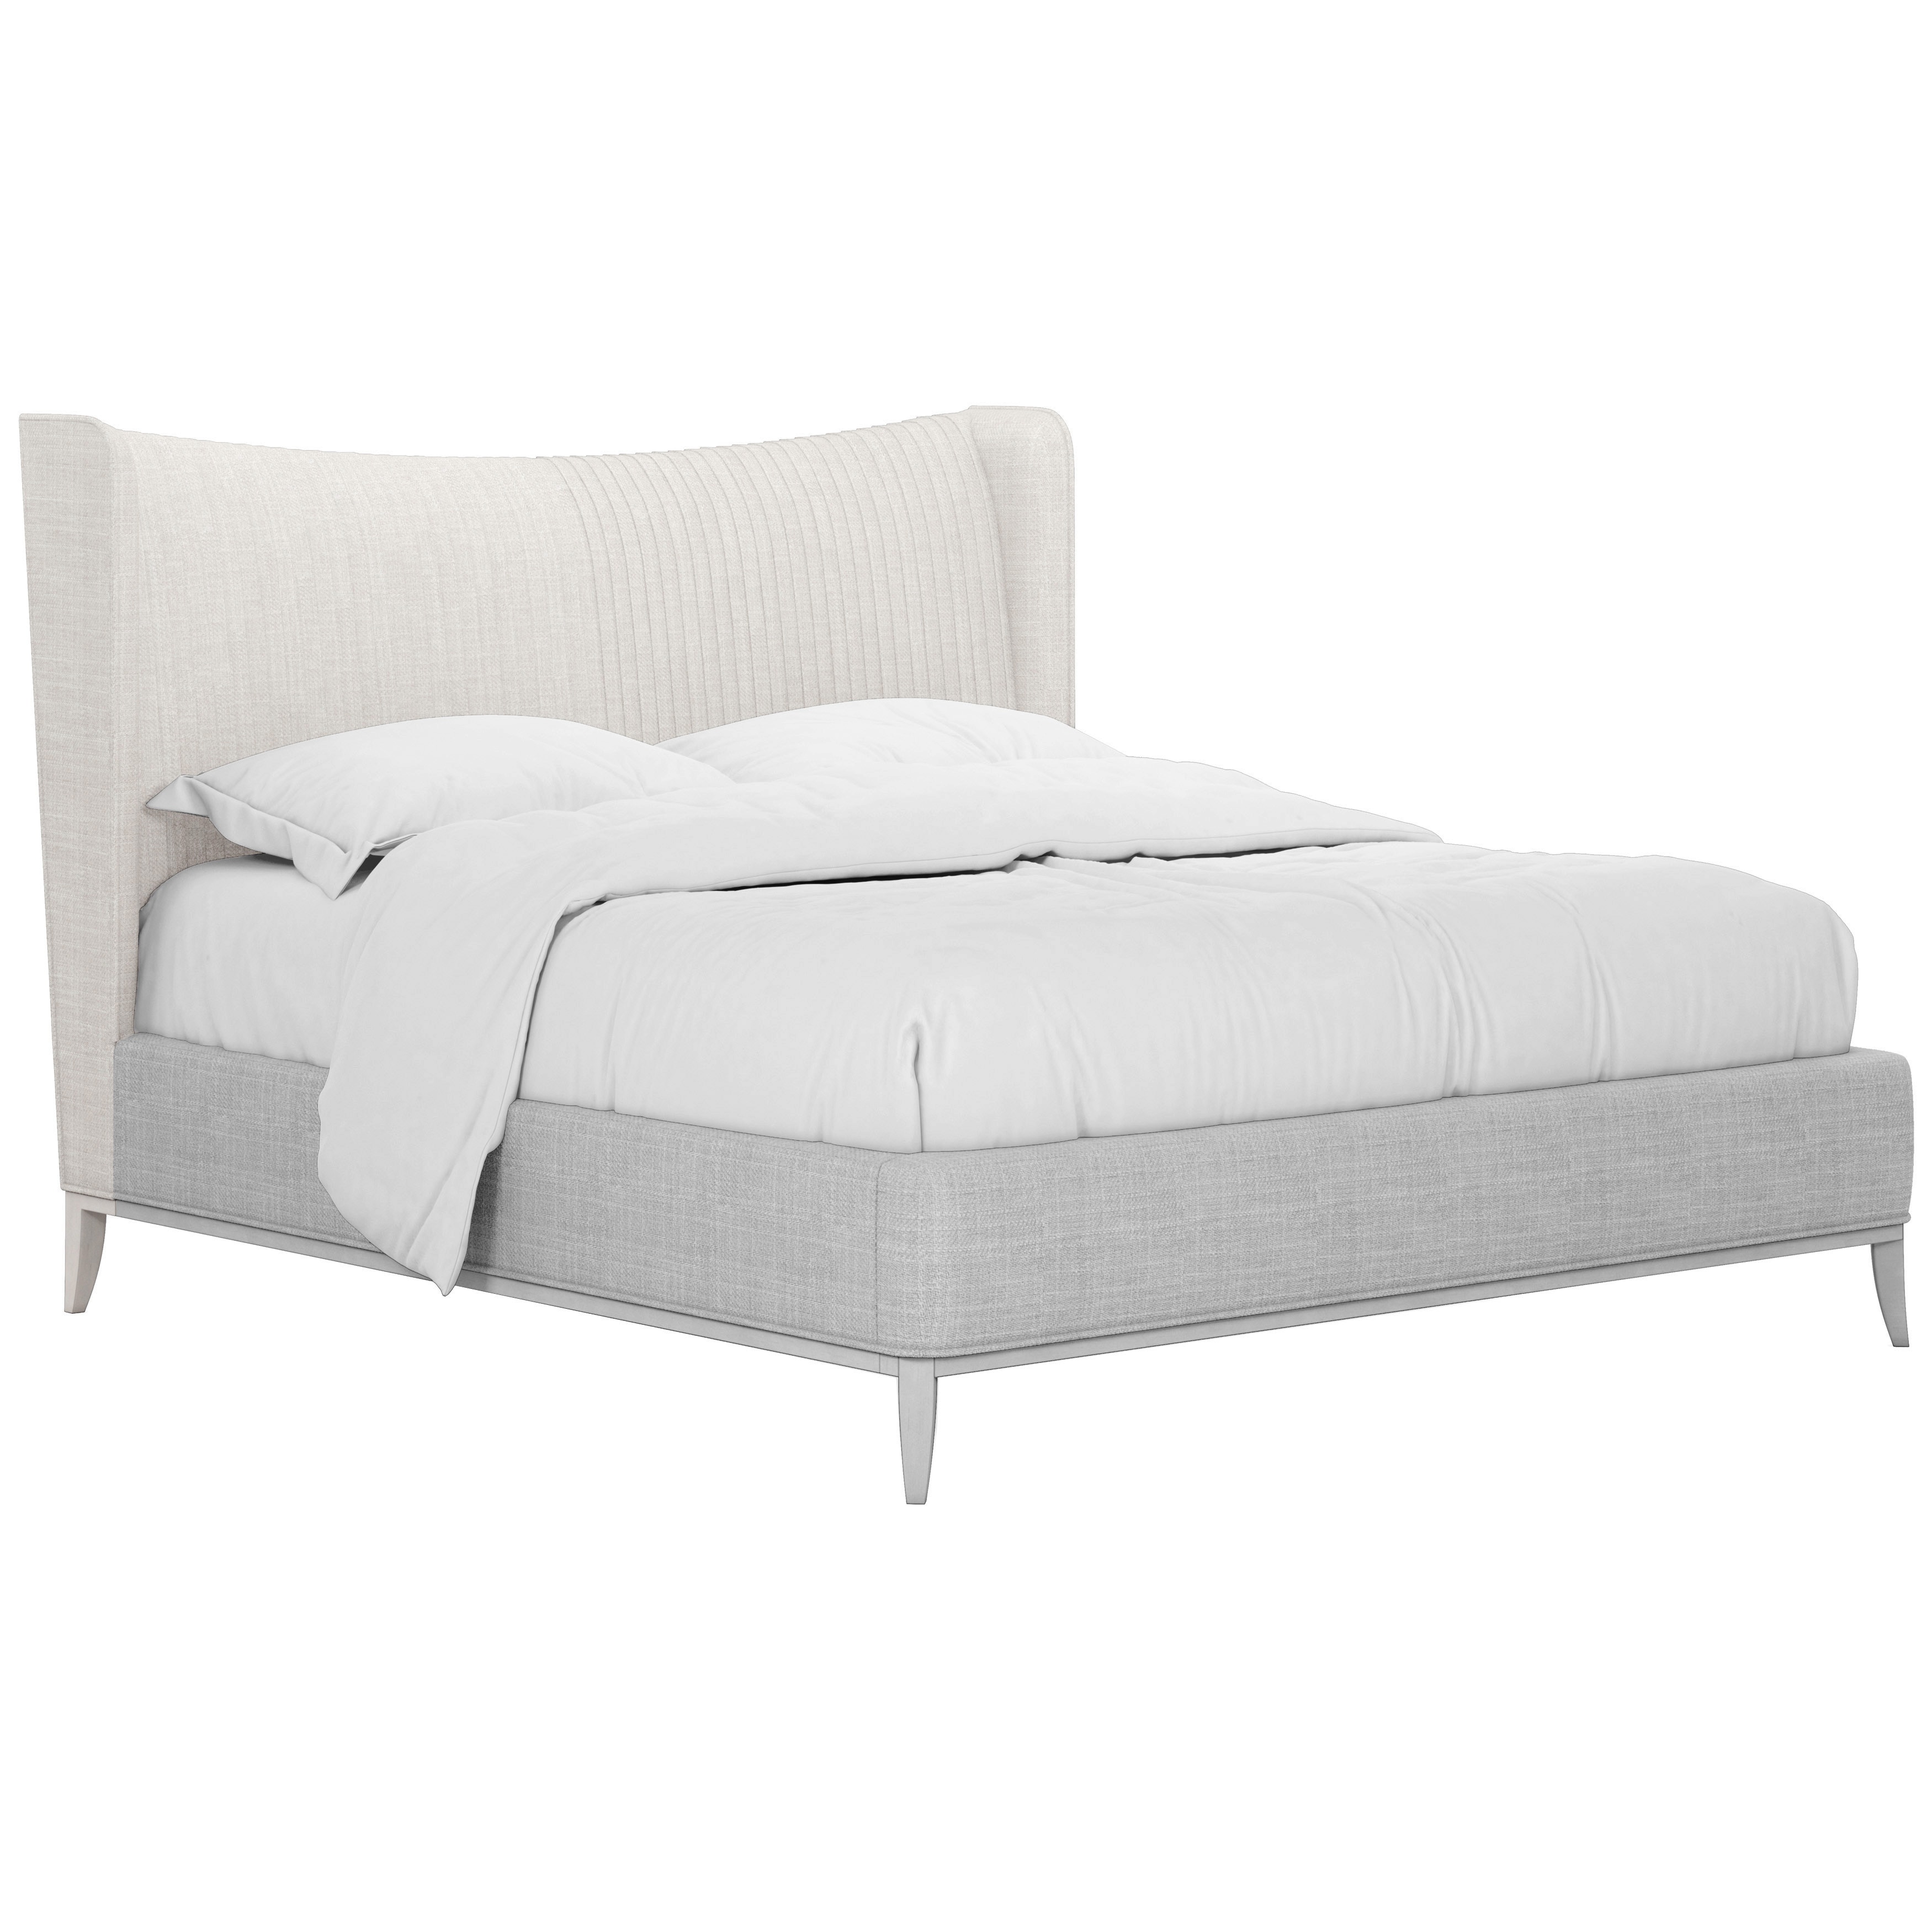 ART Furniture Bedroom Mezzanine-6/6 King Upholstered Shelter Bed